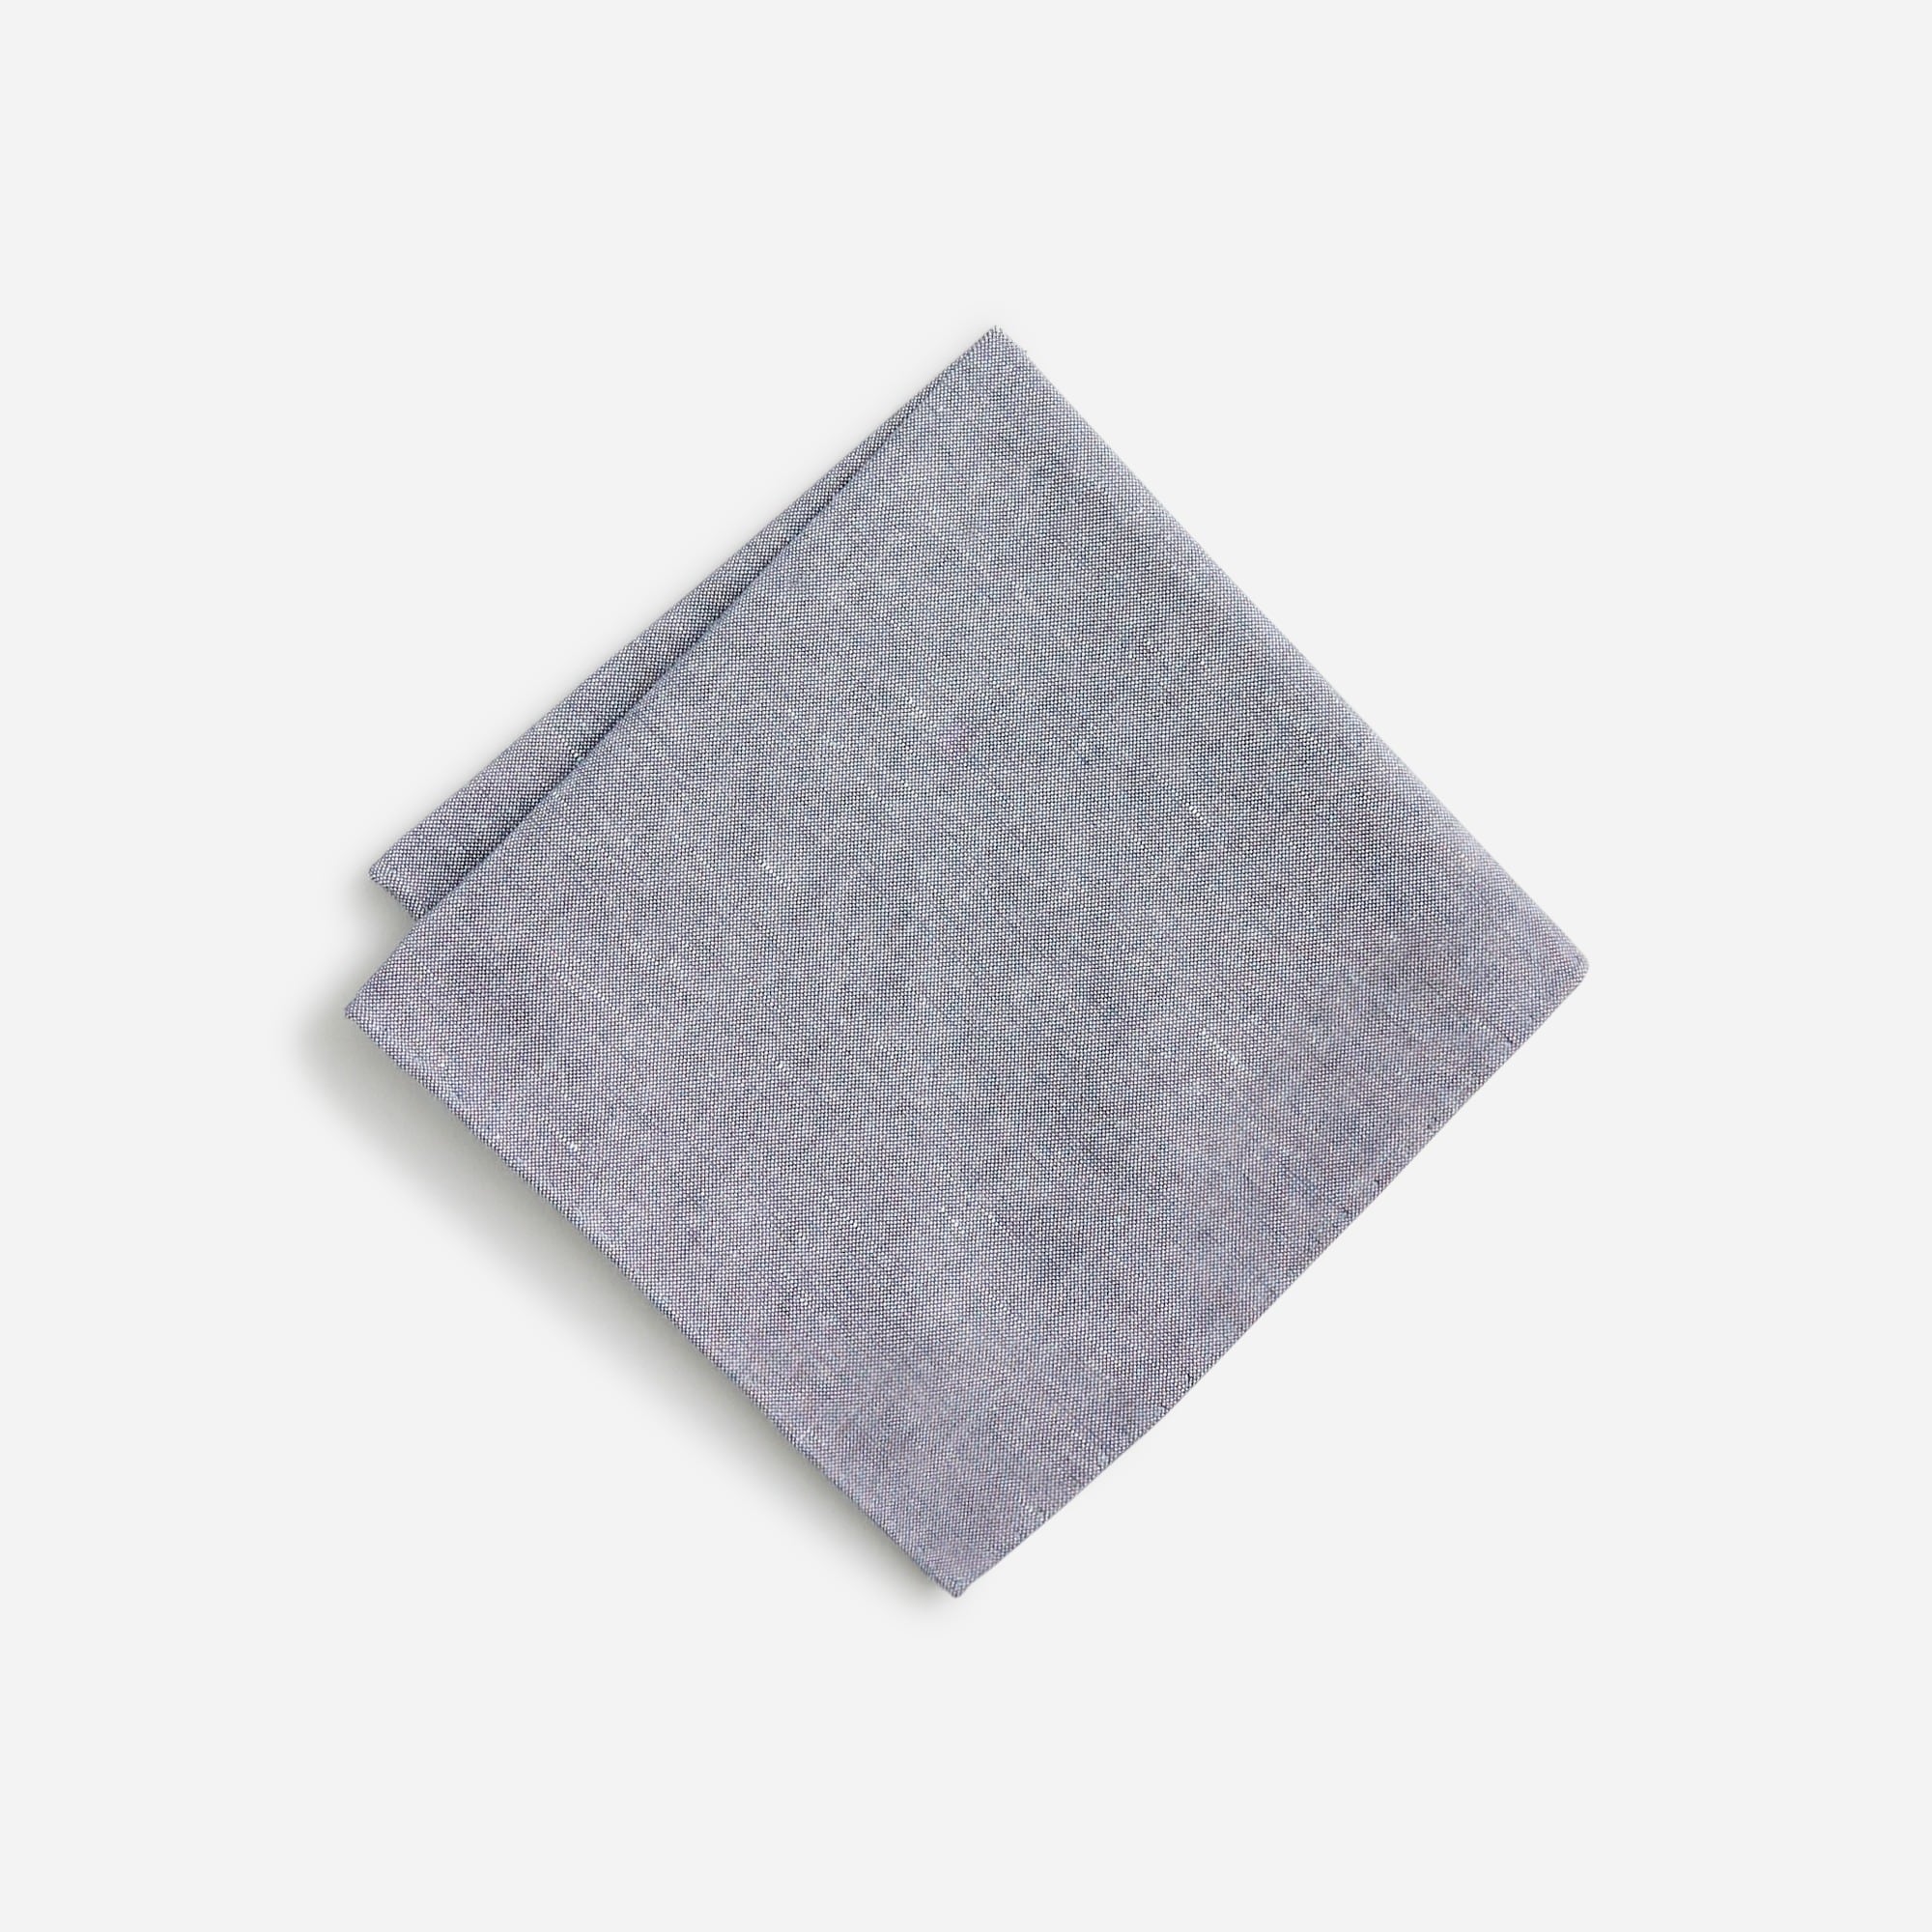  Baird McNutt Irish cotton-linen blend pocket square